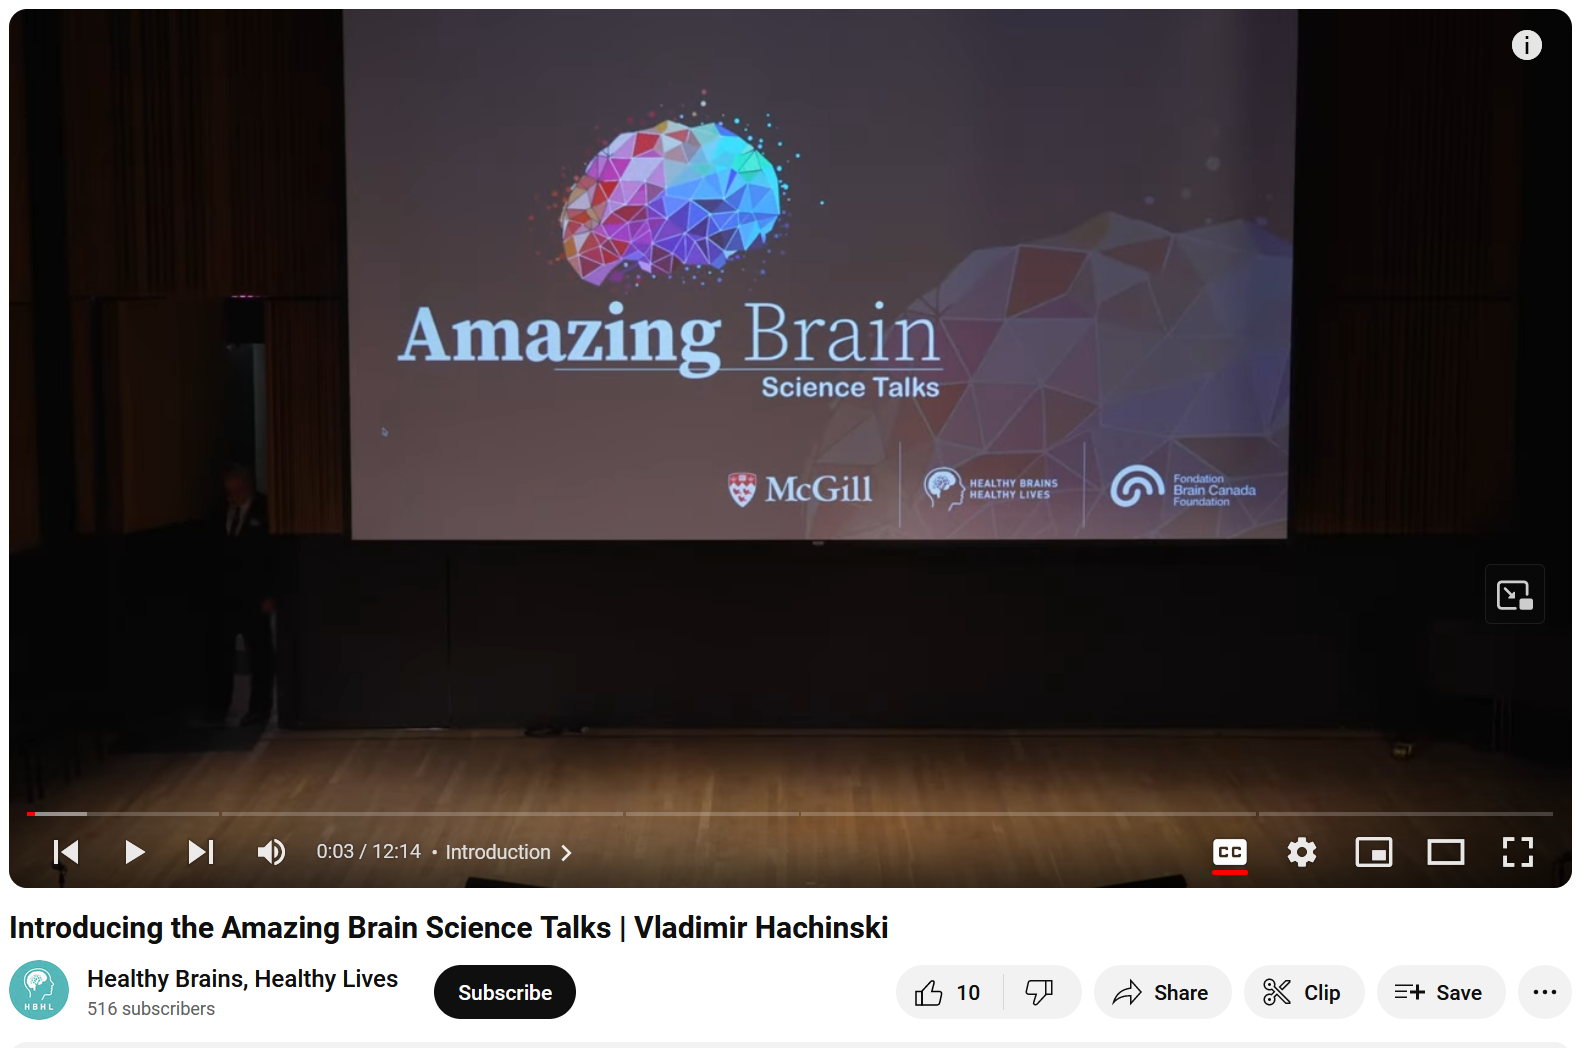 Amazing Brain Science Talks